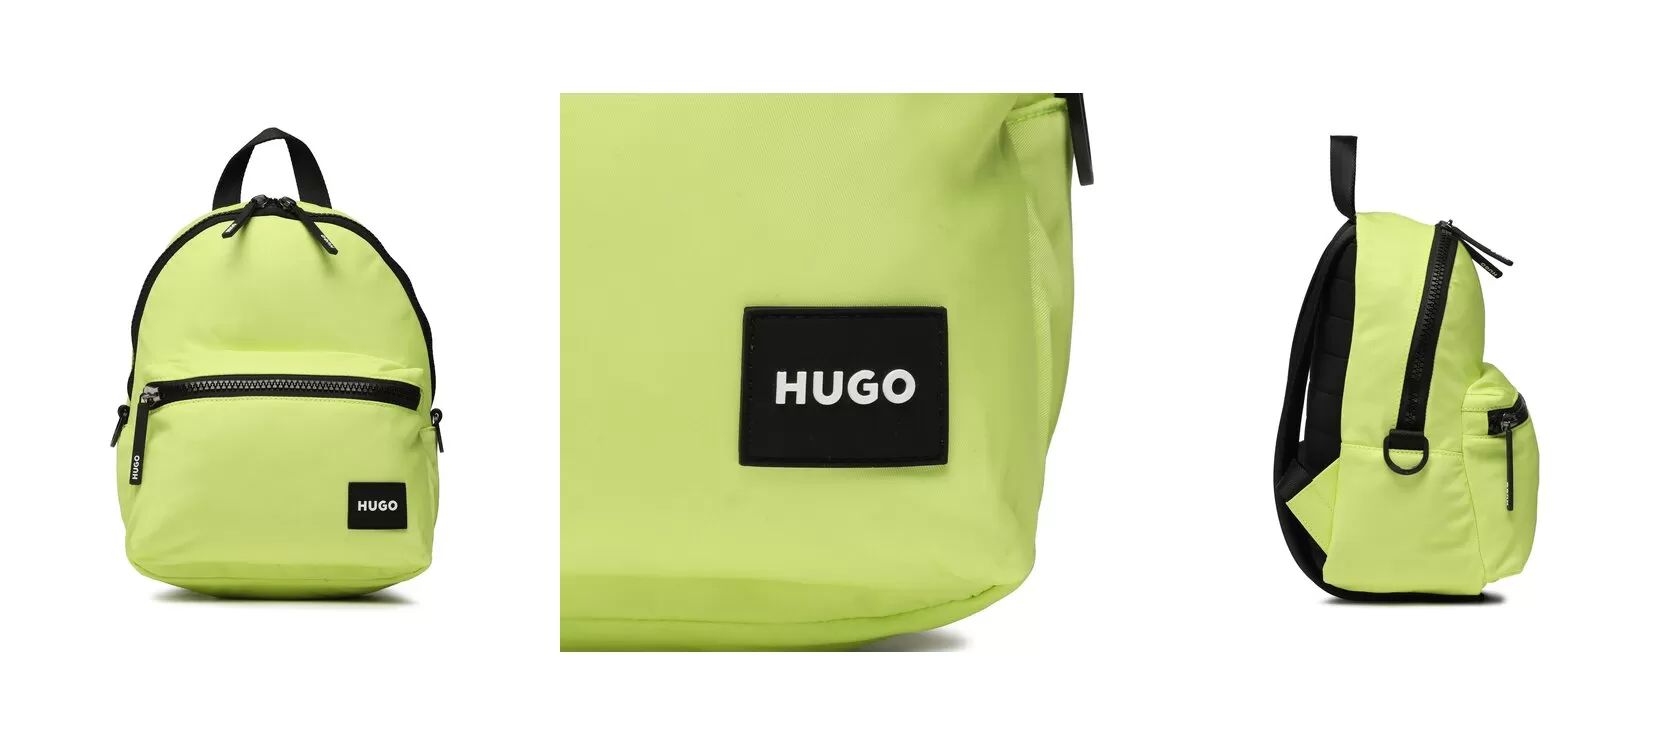 Hugo Plecak 50492700 Żółty